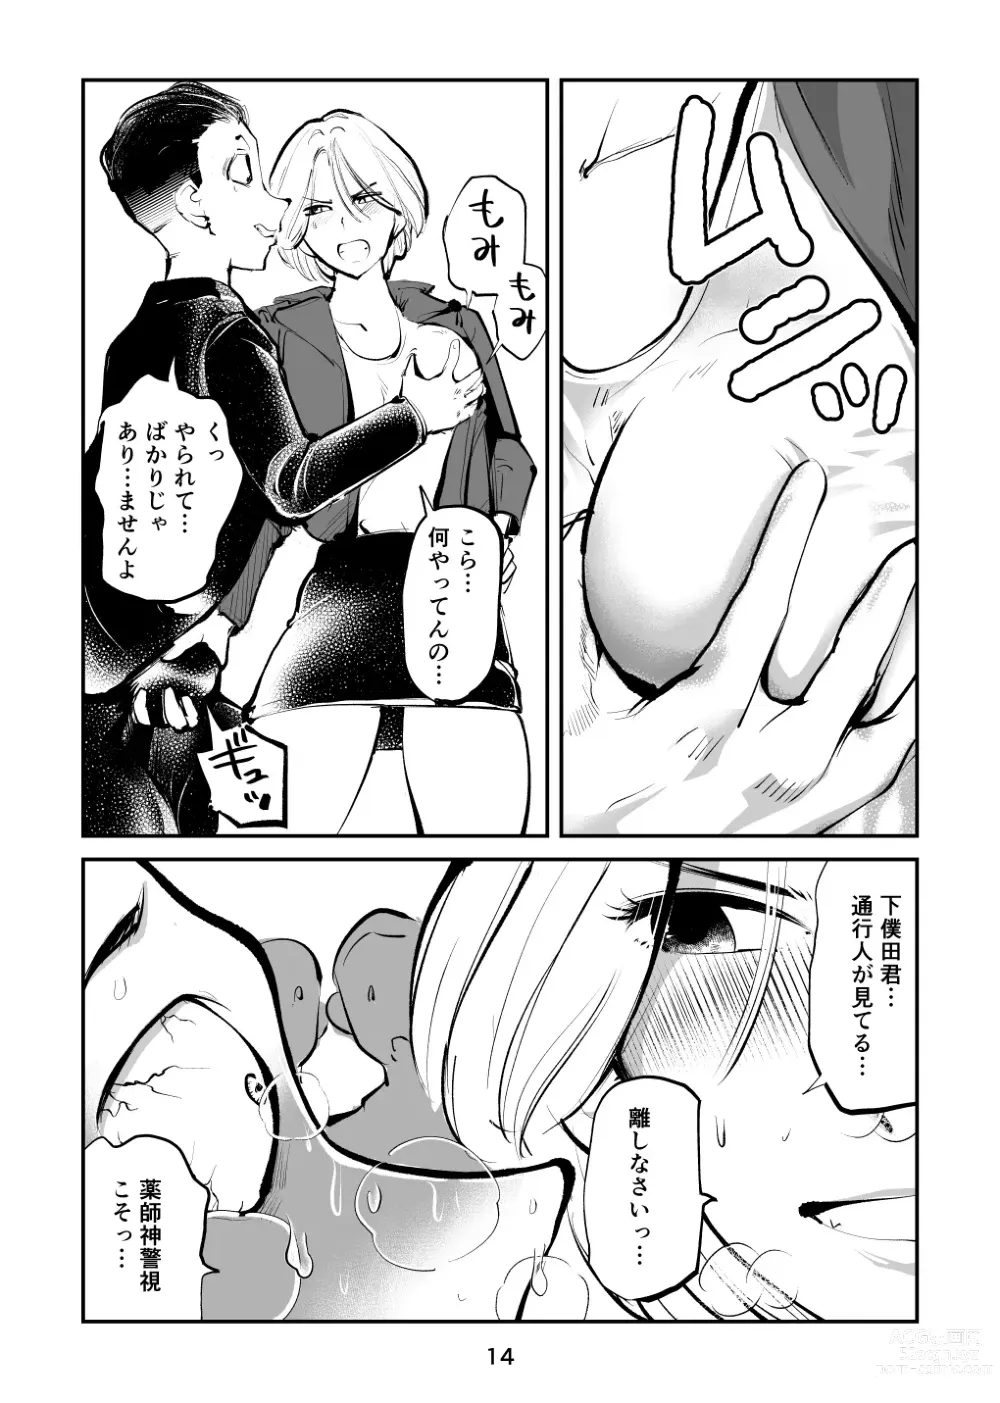 Page 14 of doujinshi Kinkeri onna keiji ryōko